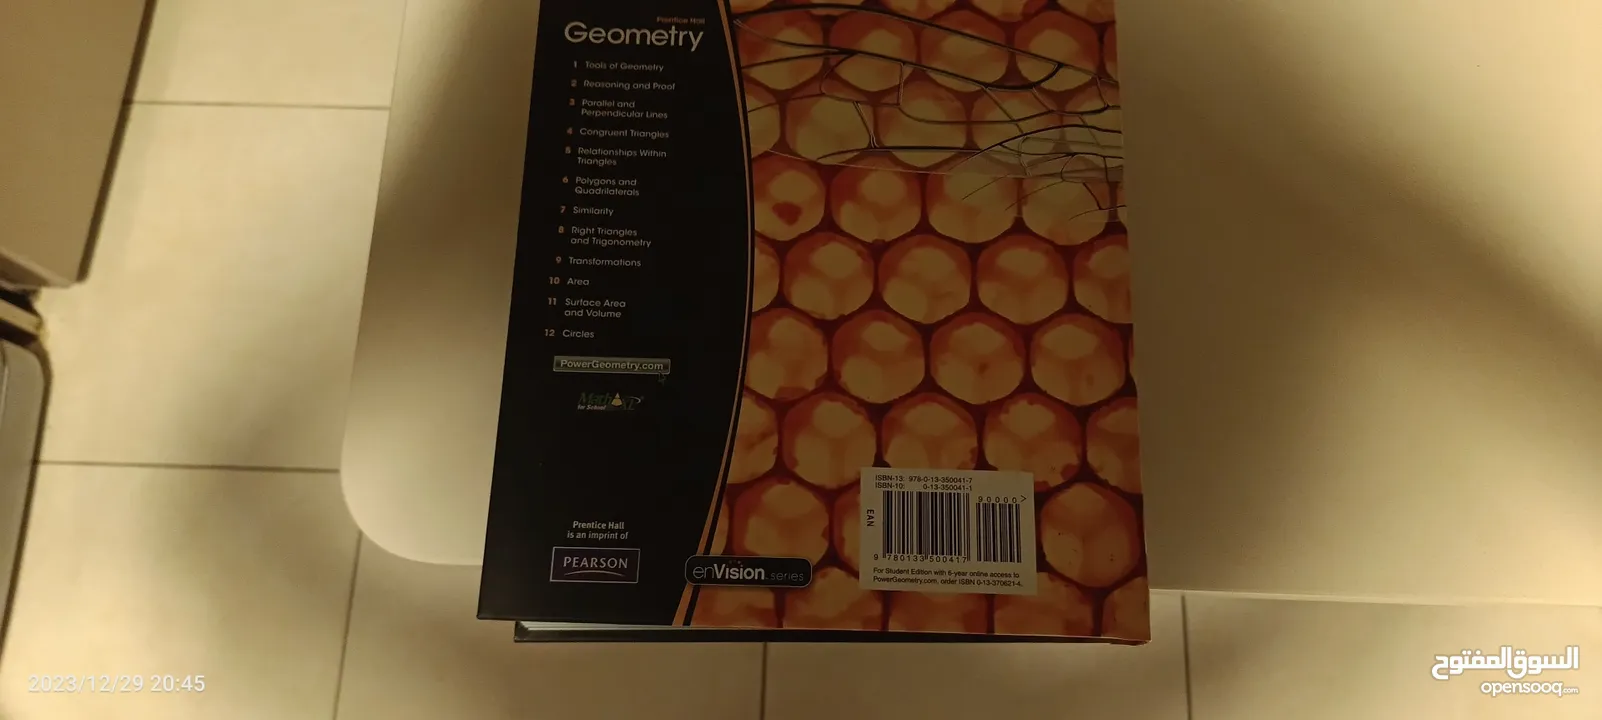 Pearson geometry original book great condition  كتاب بيرسون جيومتري أصلي بحالة ممتازة